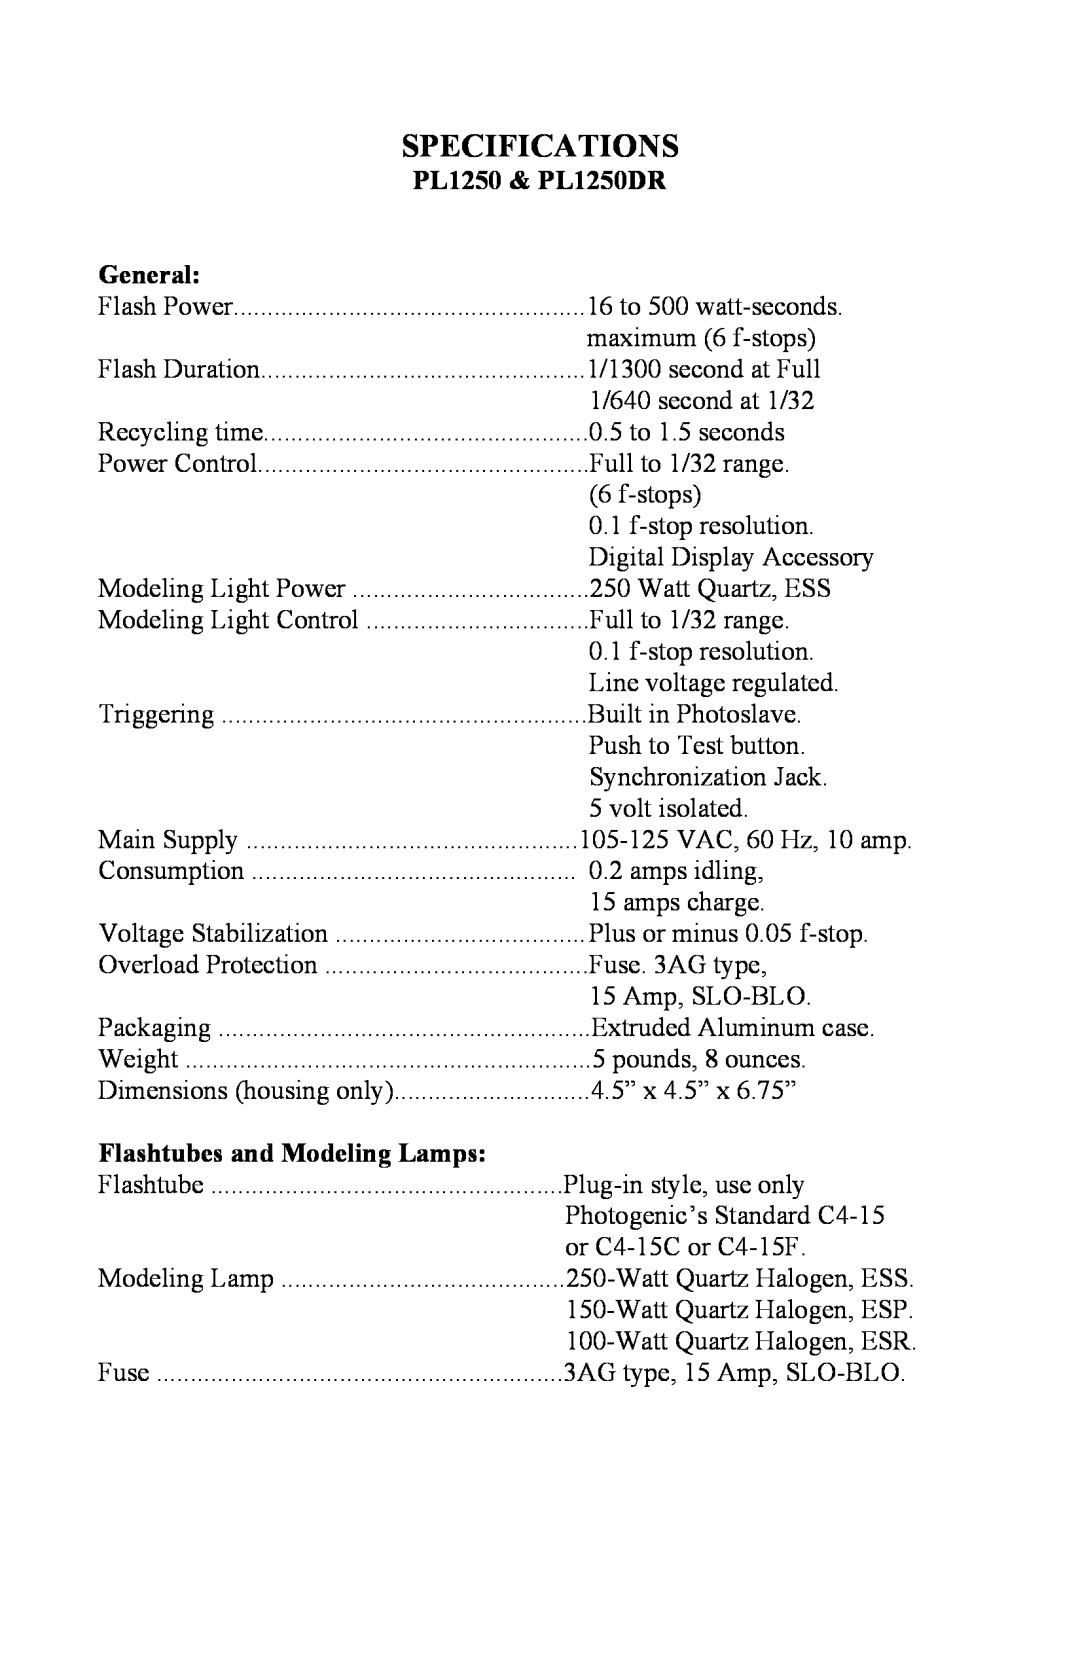 Photogenic Professional Lighting PowerLight 1250 Specifications, 105-125 VAC, 60 Hz, 10 amp, Watt Quartz Halogen, ESS 